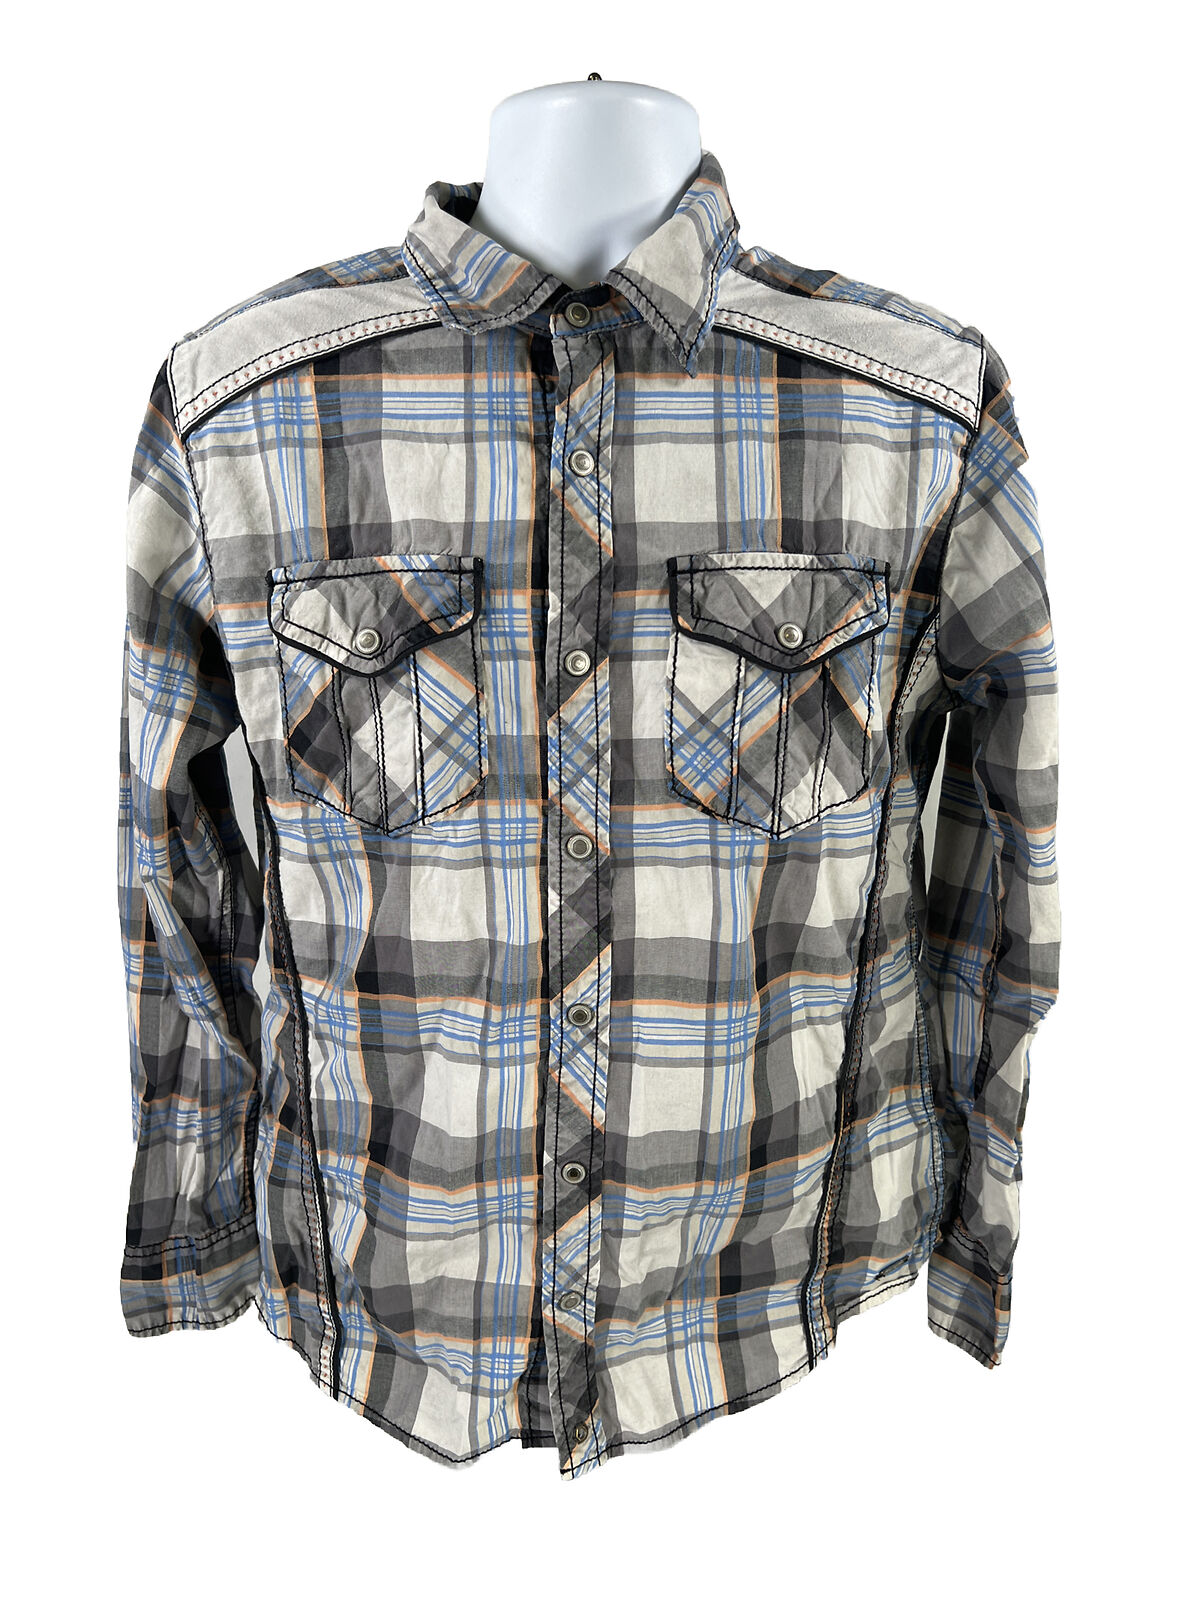 Camisa informal ajustada de manga larga a cuadros gris con hebilla negra para hombre - M